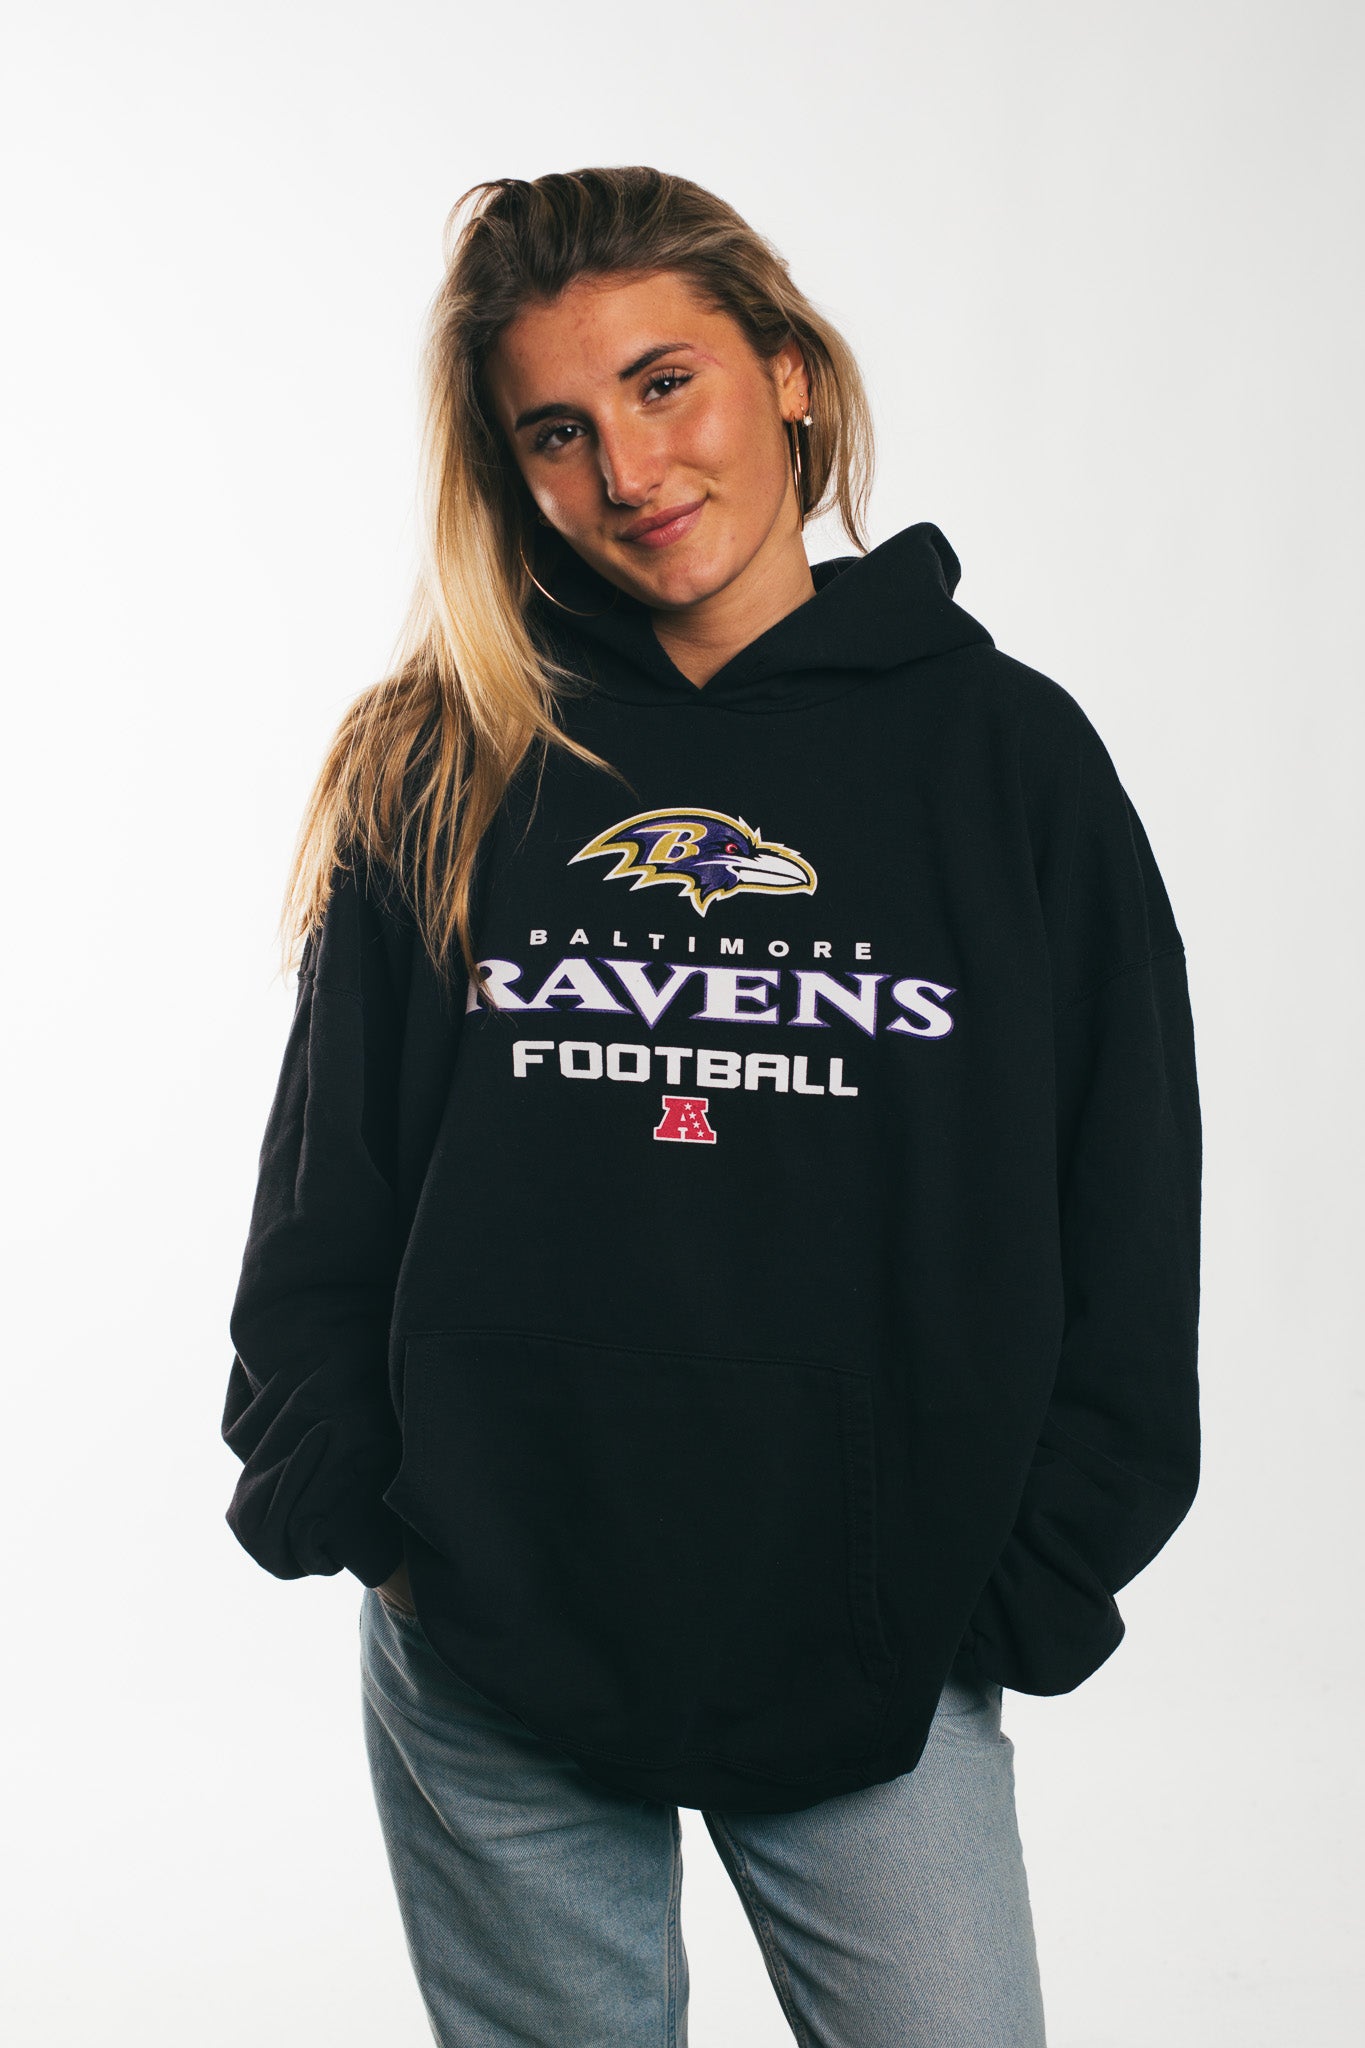 Ravens Football - Hoodie (XL)